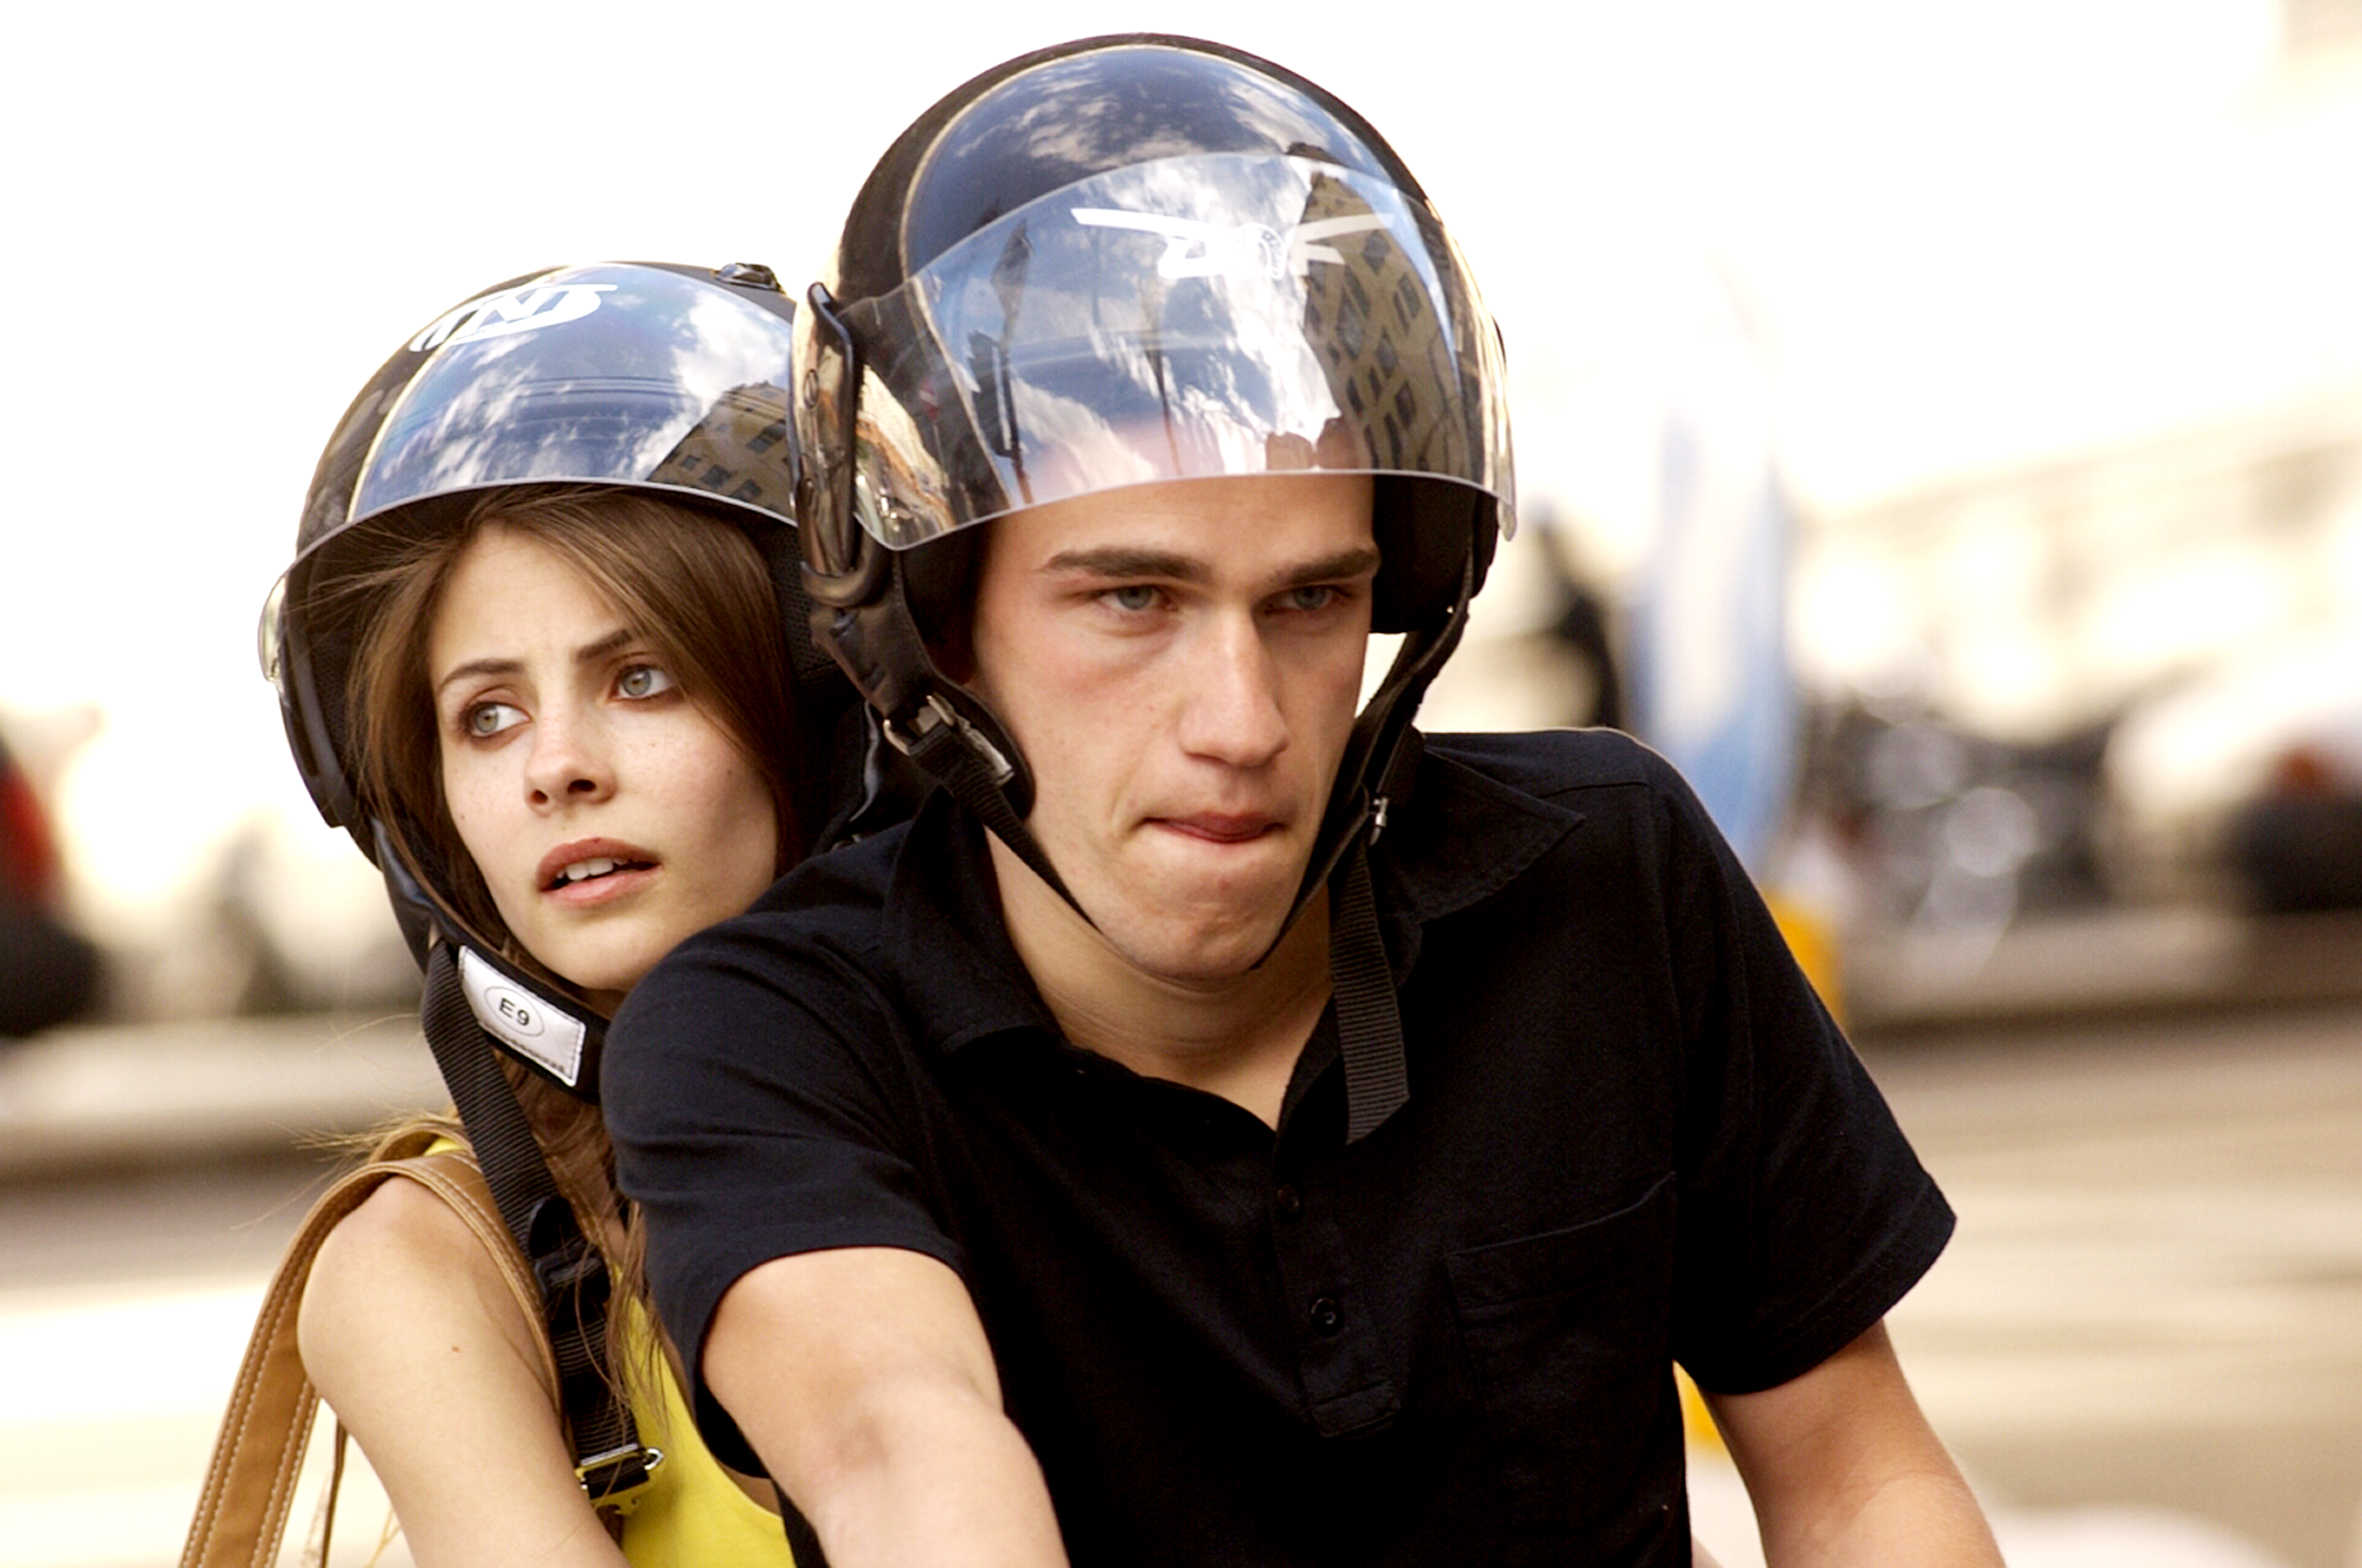 Willa Holland stars as Kelly and Alessandro Giuggioli stars as Lorenzo in E1 Entertainment's Summer in Genoa, A (2009)